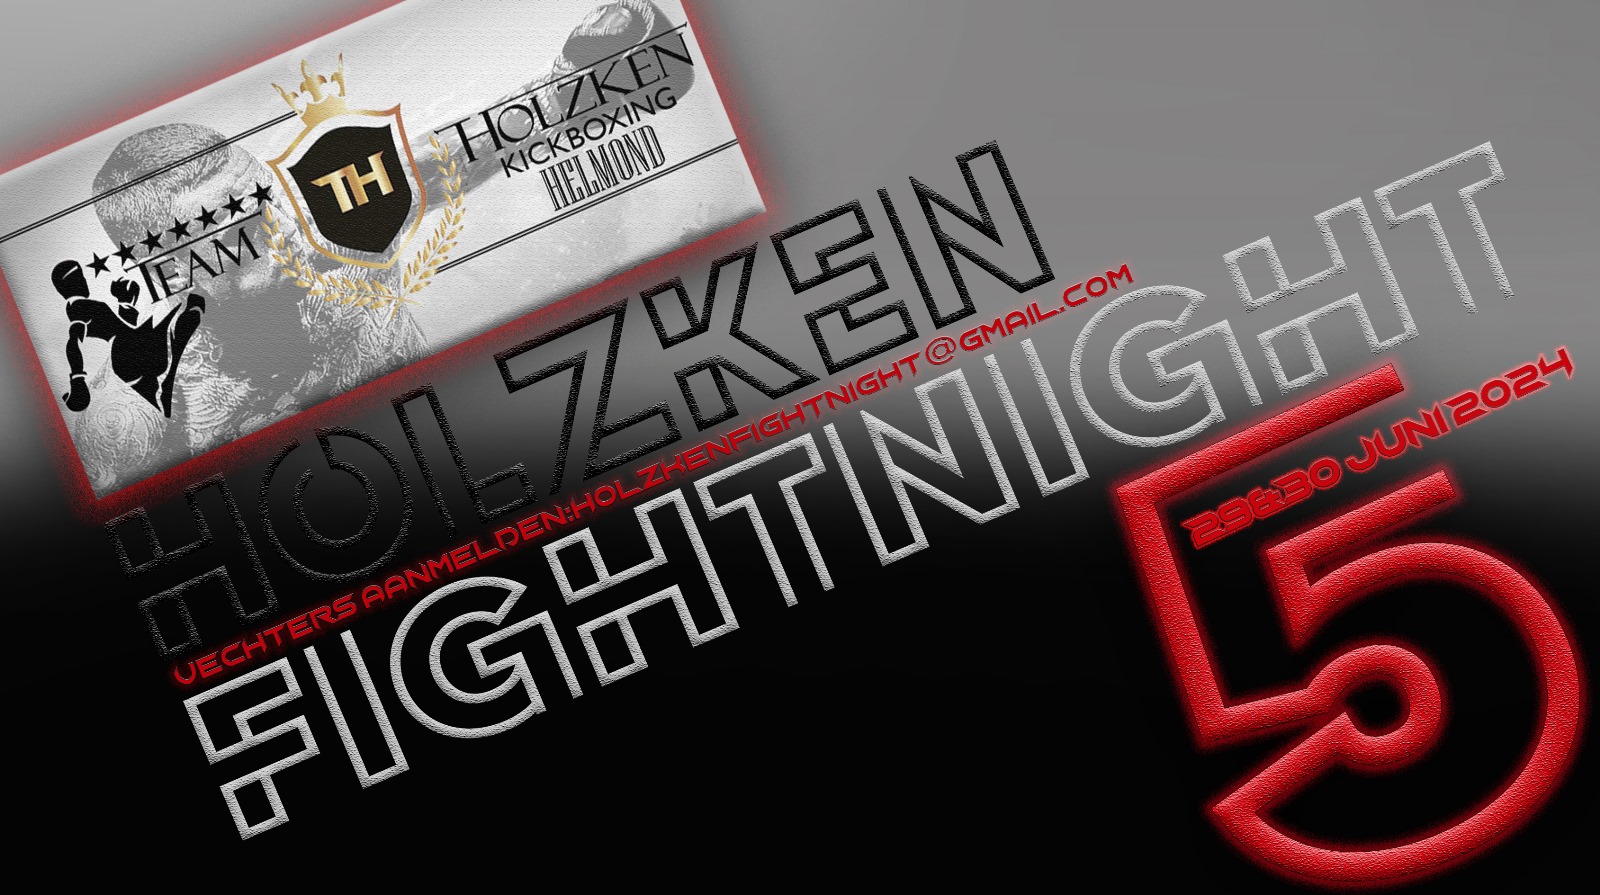 Holzken Fight Night 5 N-C-B-A